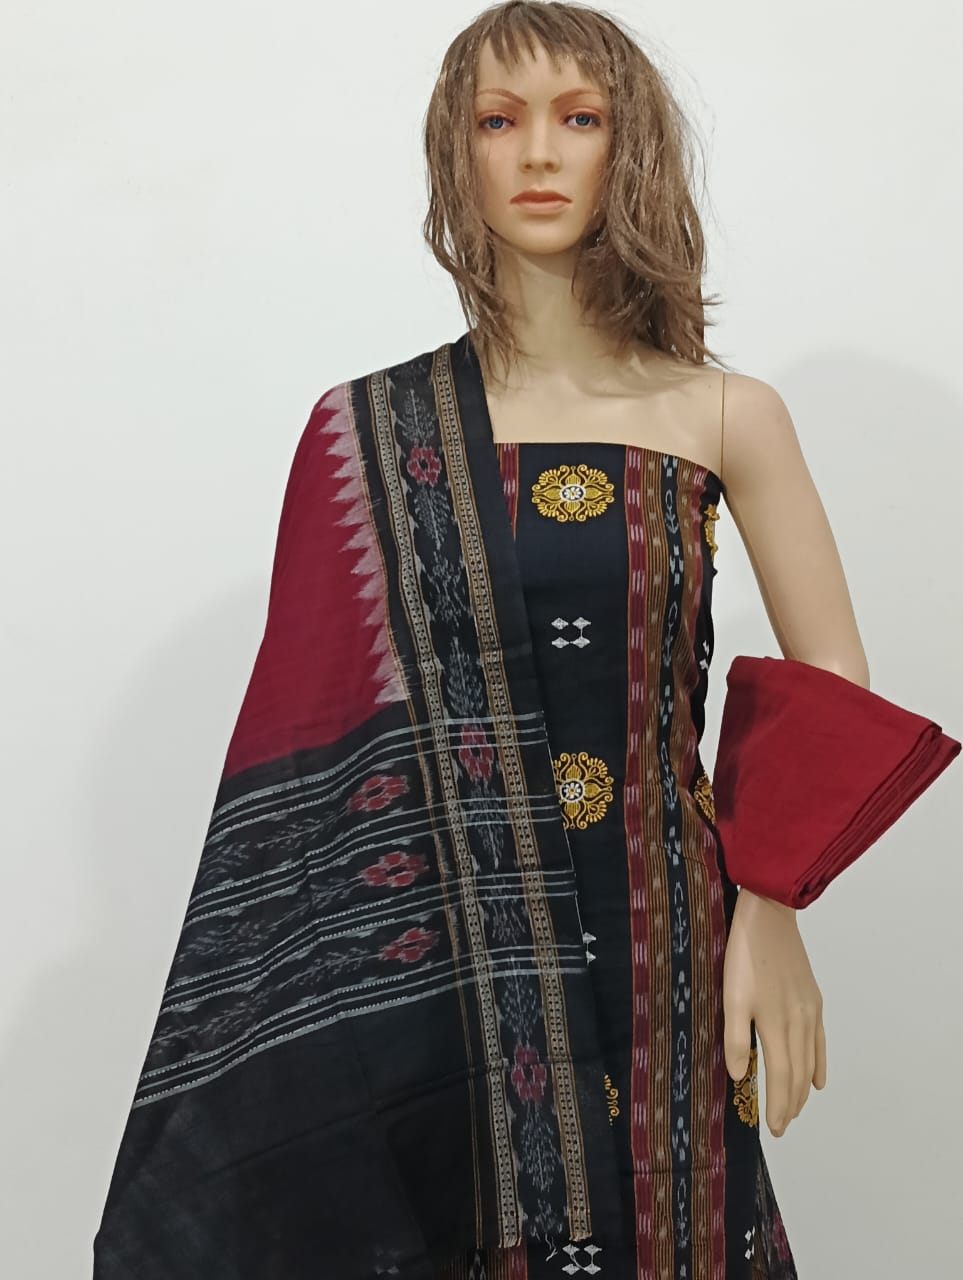 Buy Green Sambalpuri Designer Top and Skirt Online at Classystreet